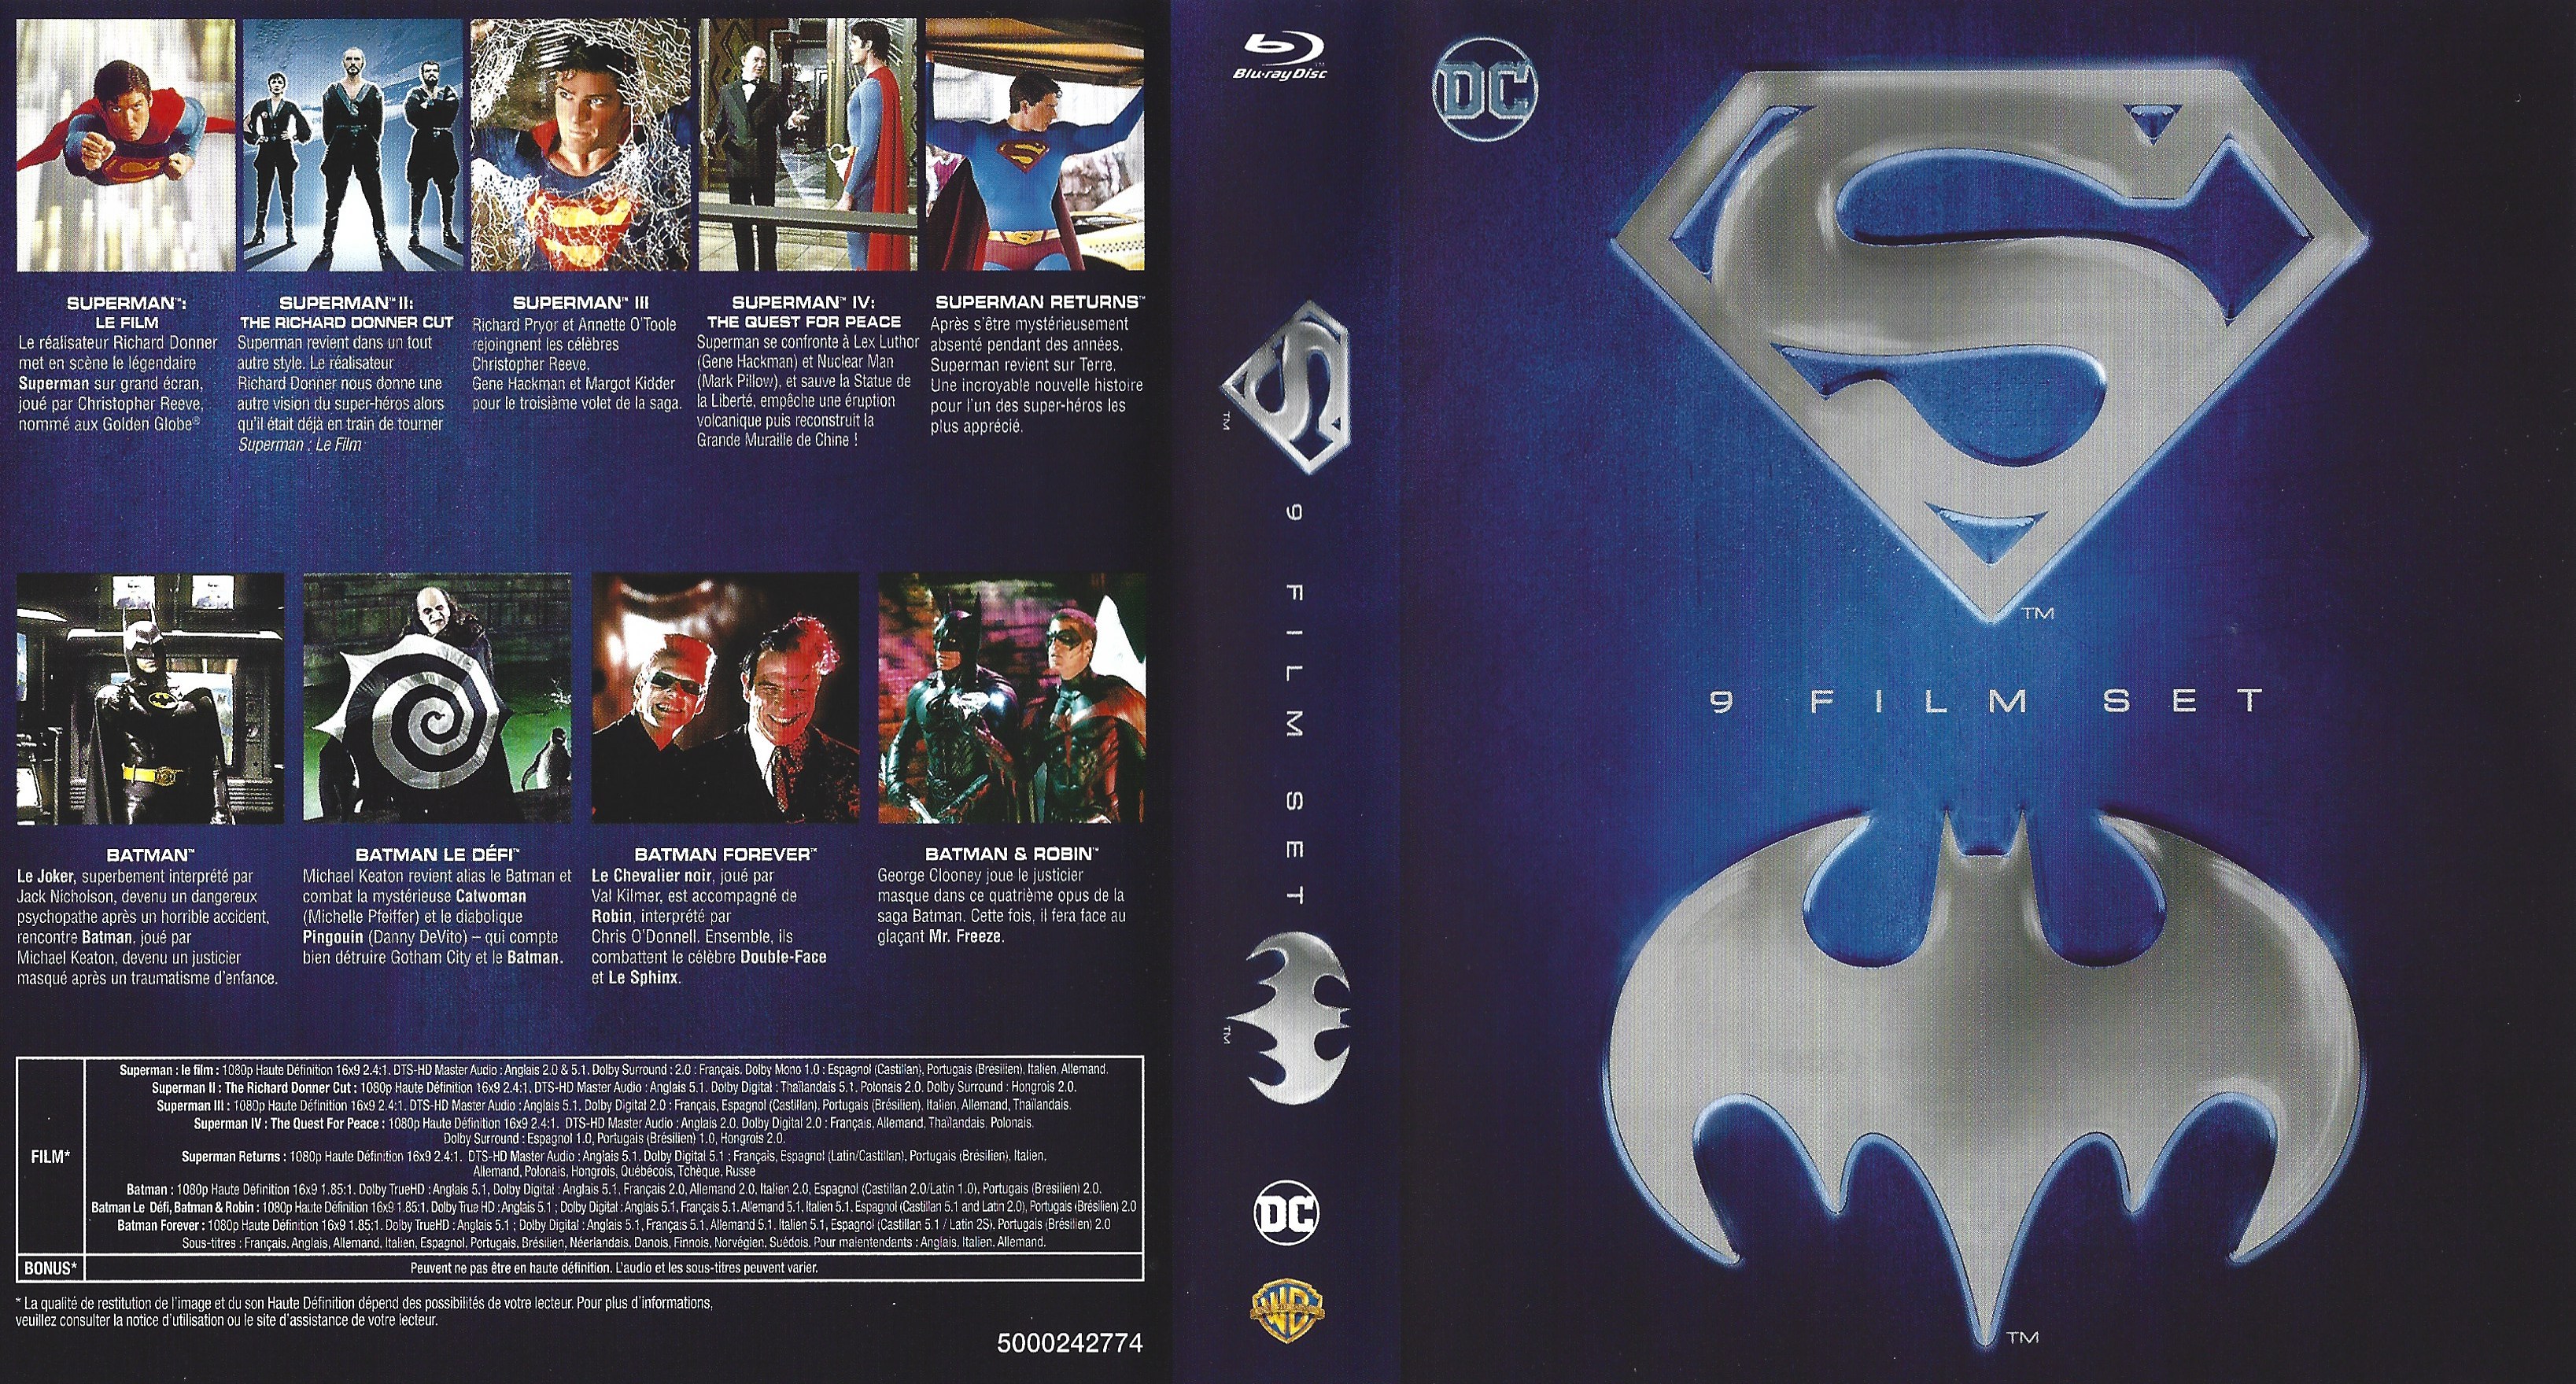 Jaquette DVD Superman Batman 9 film set (BLU-RAY)